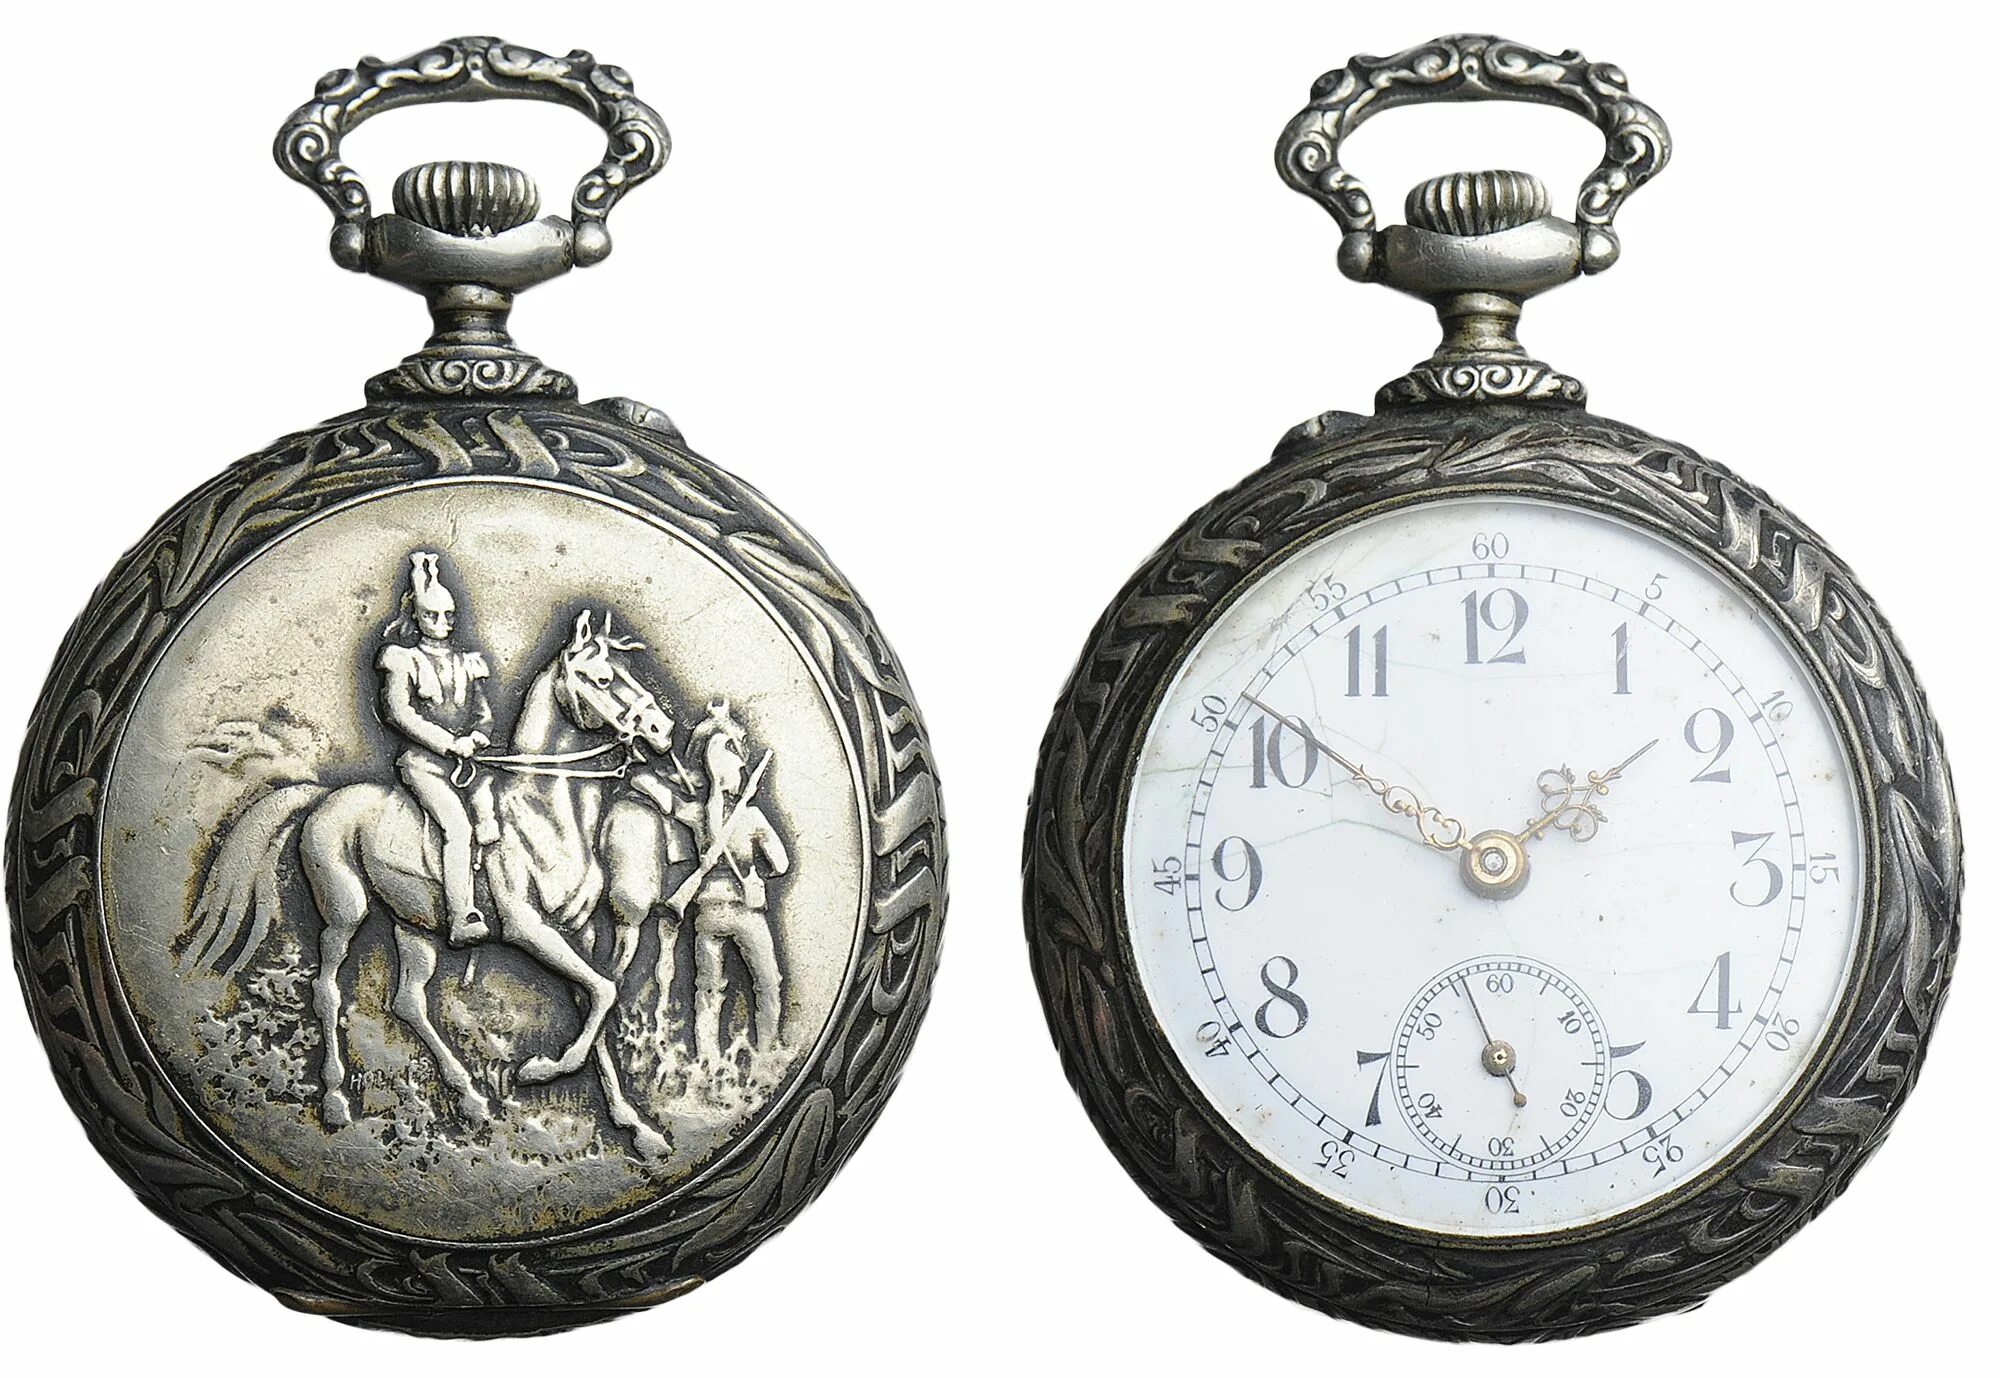 Карманные часы корпус. Карманные часы Moeris. Brevete SGDG часы карманные. Карманные часы Мерседес 1903 Japona.